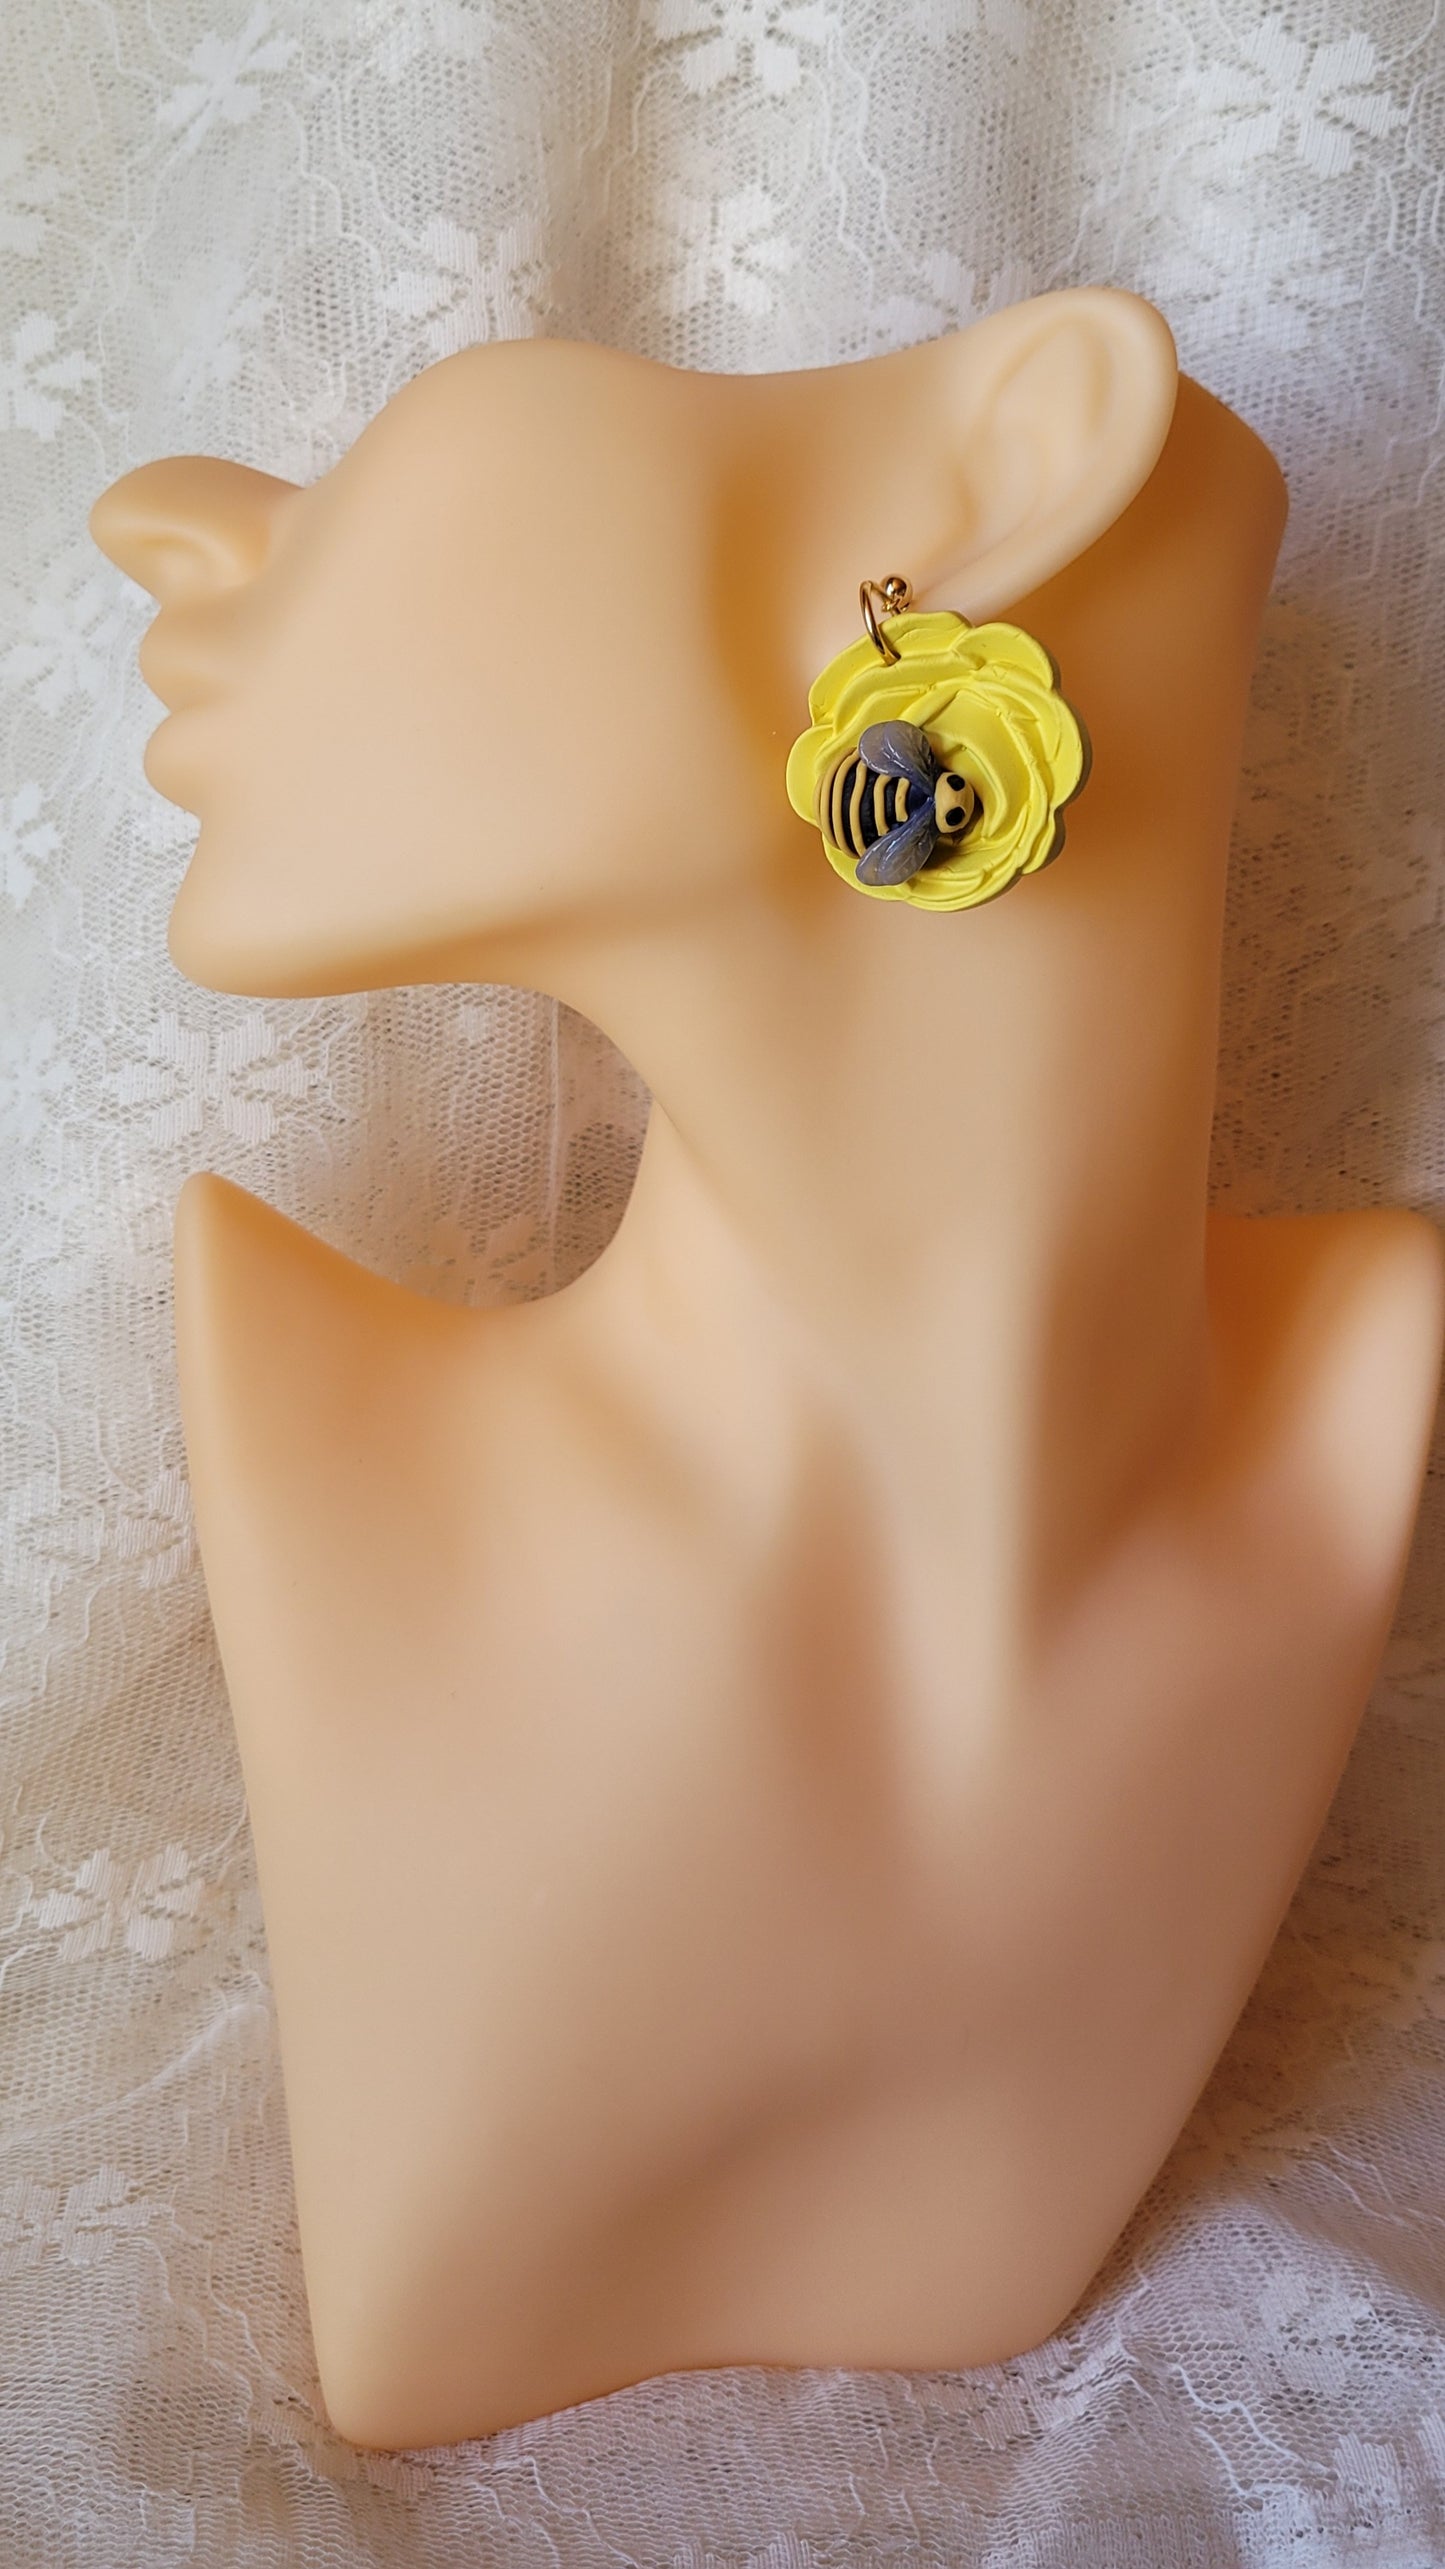 Bee earrings| Floral Earrings|Yellow rose earrings| Honey bee jewelry